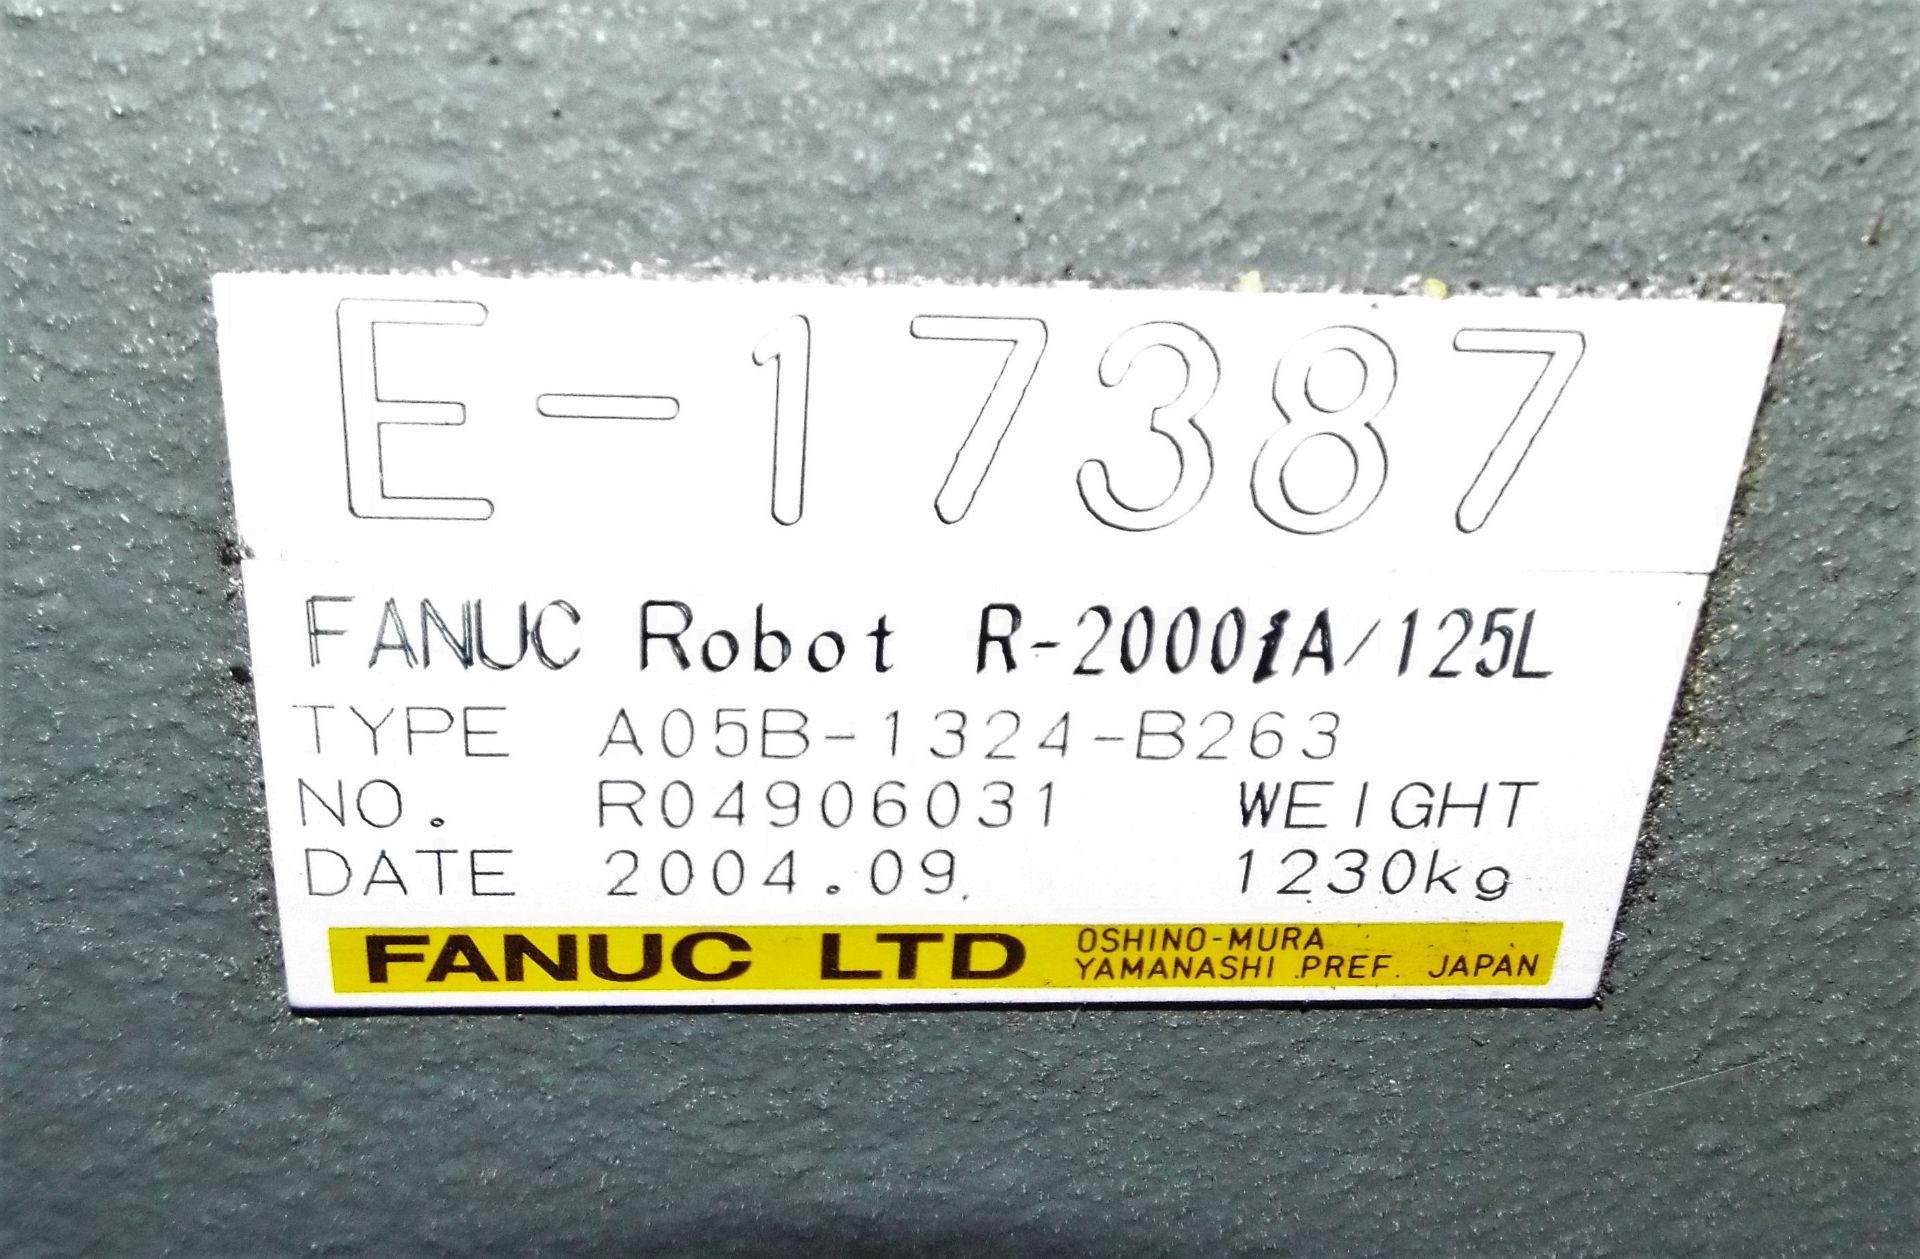 Fanuc Robot Type R-2000 - iA - 125L - RJ3iB Control - Image 4 of 8